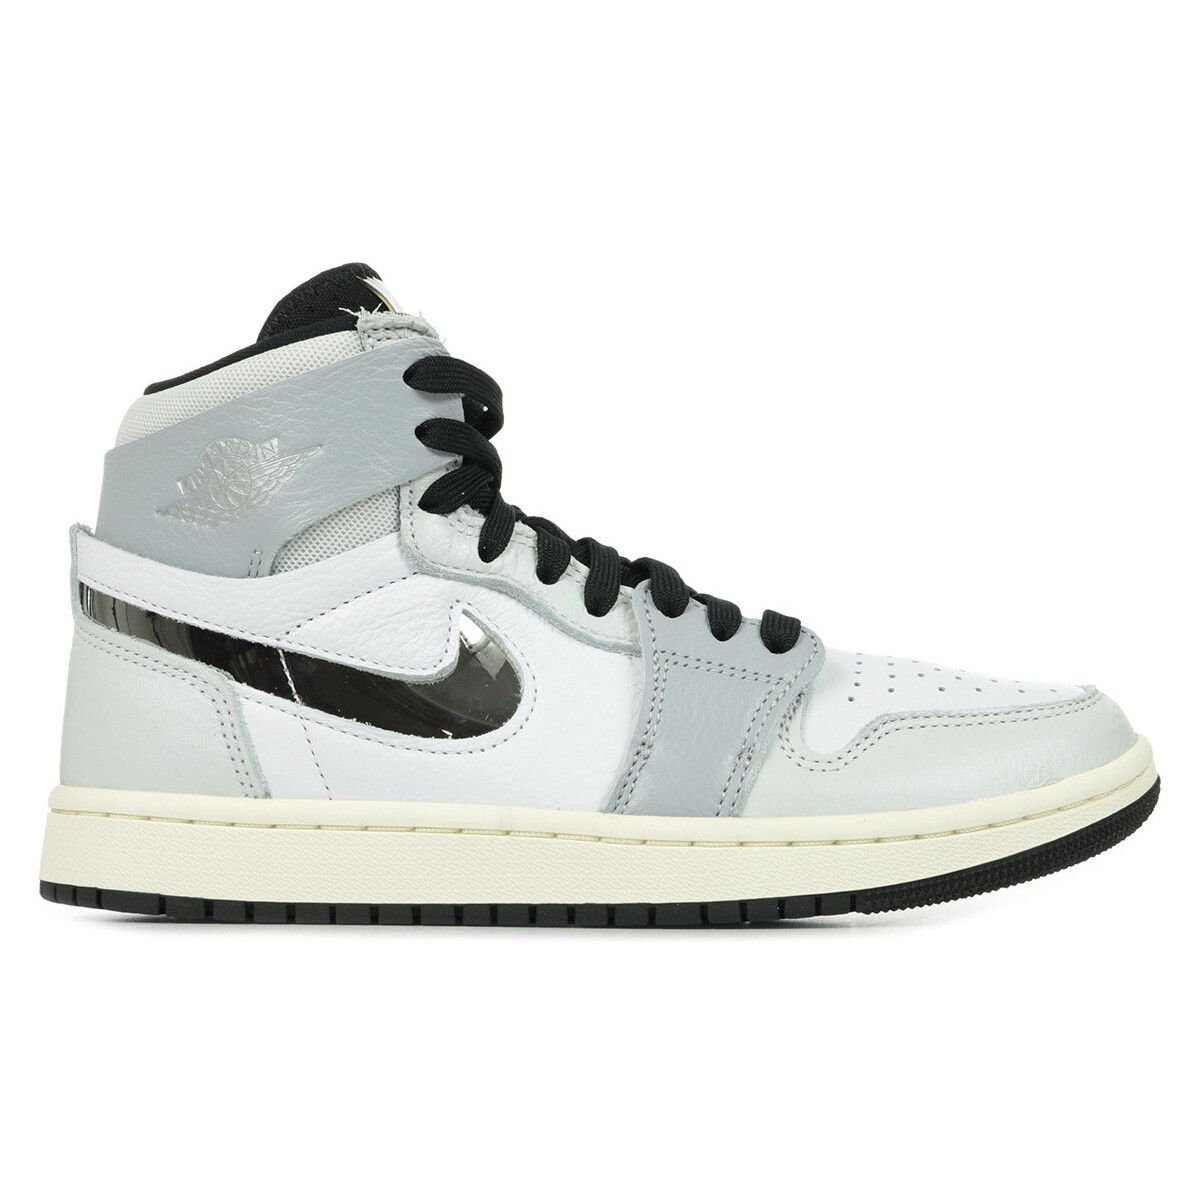 Schuhe Herren Sneaker Nike Air Jordan 1 Zm Air Cmft 2 Weiss